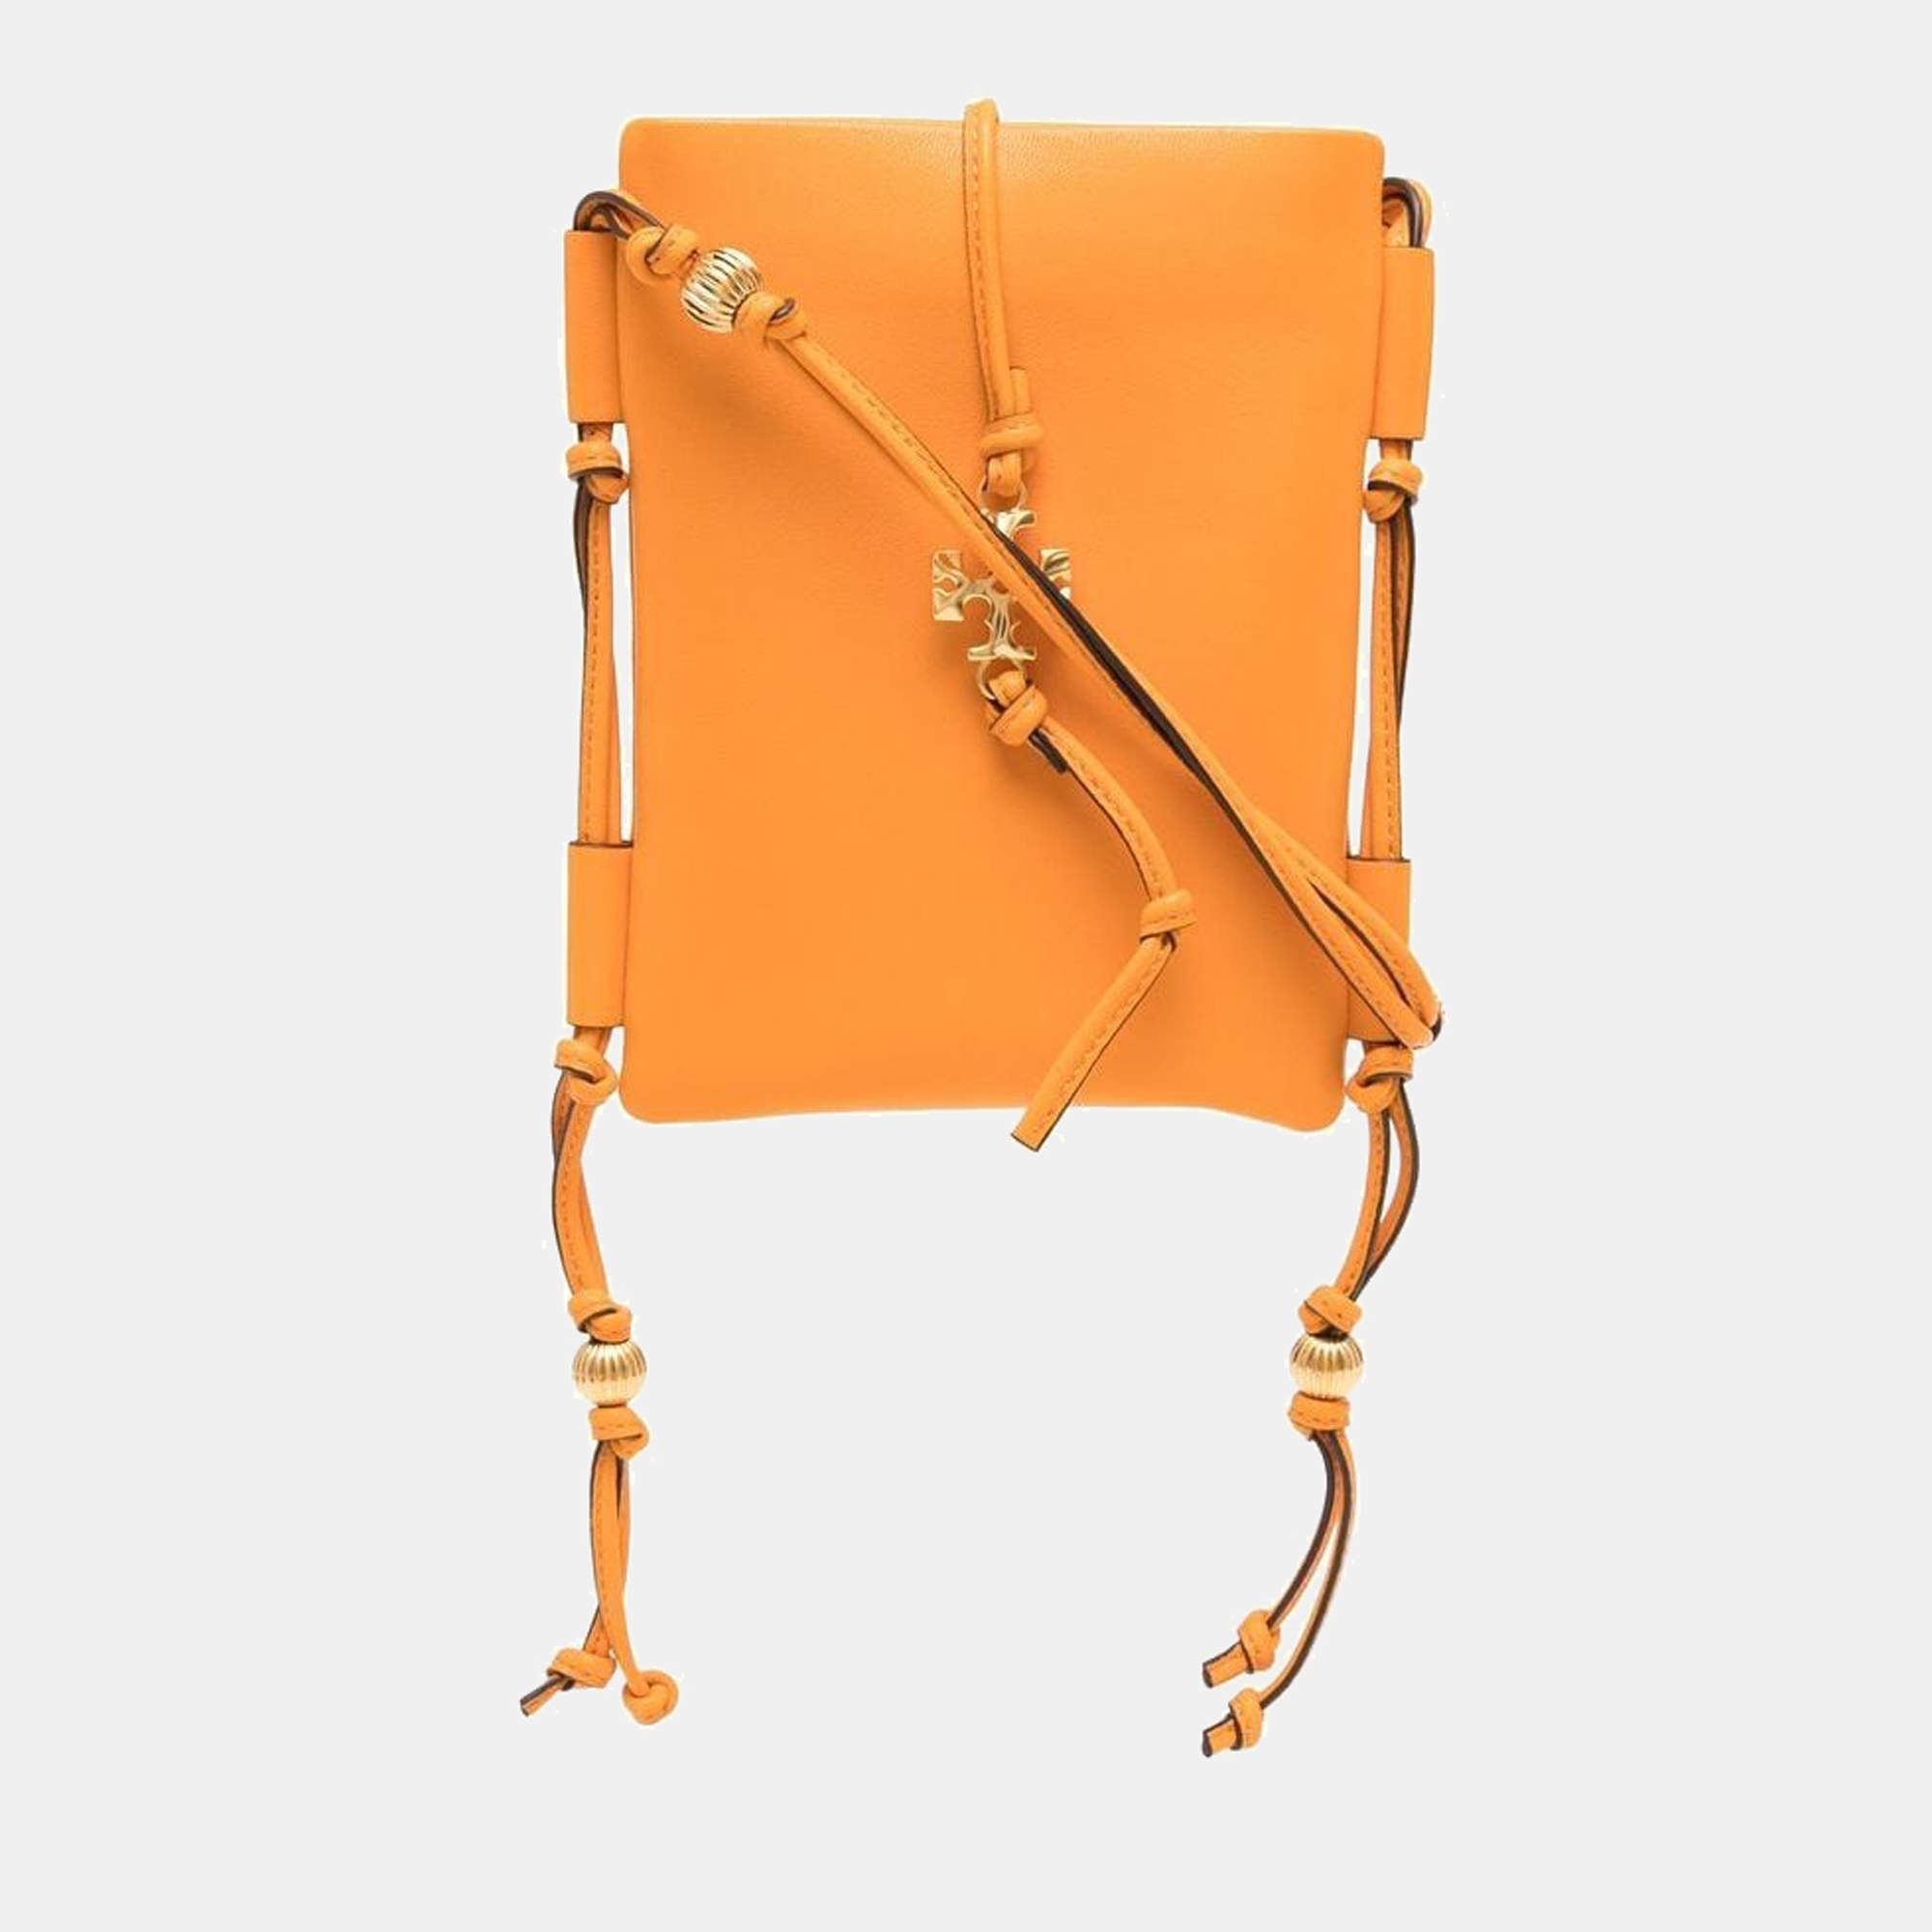 Tory Burch Robinson Mini Patent Leather Shoulder Bag in Orange